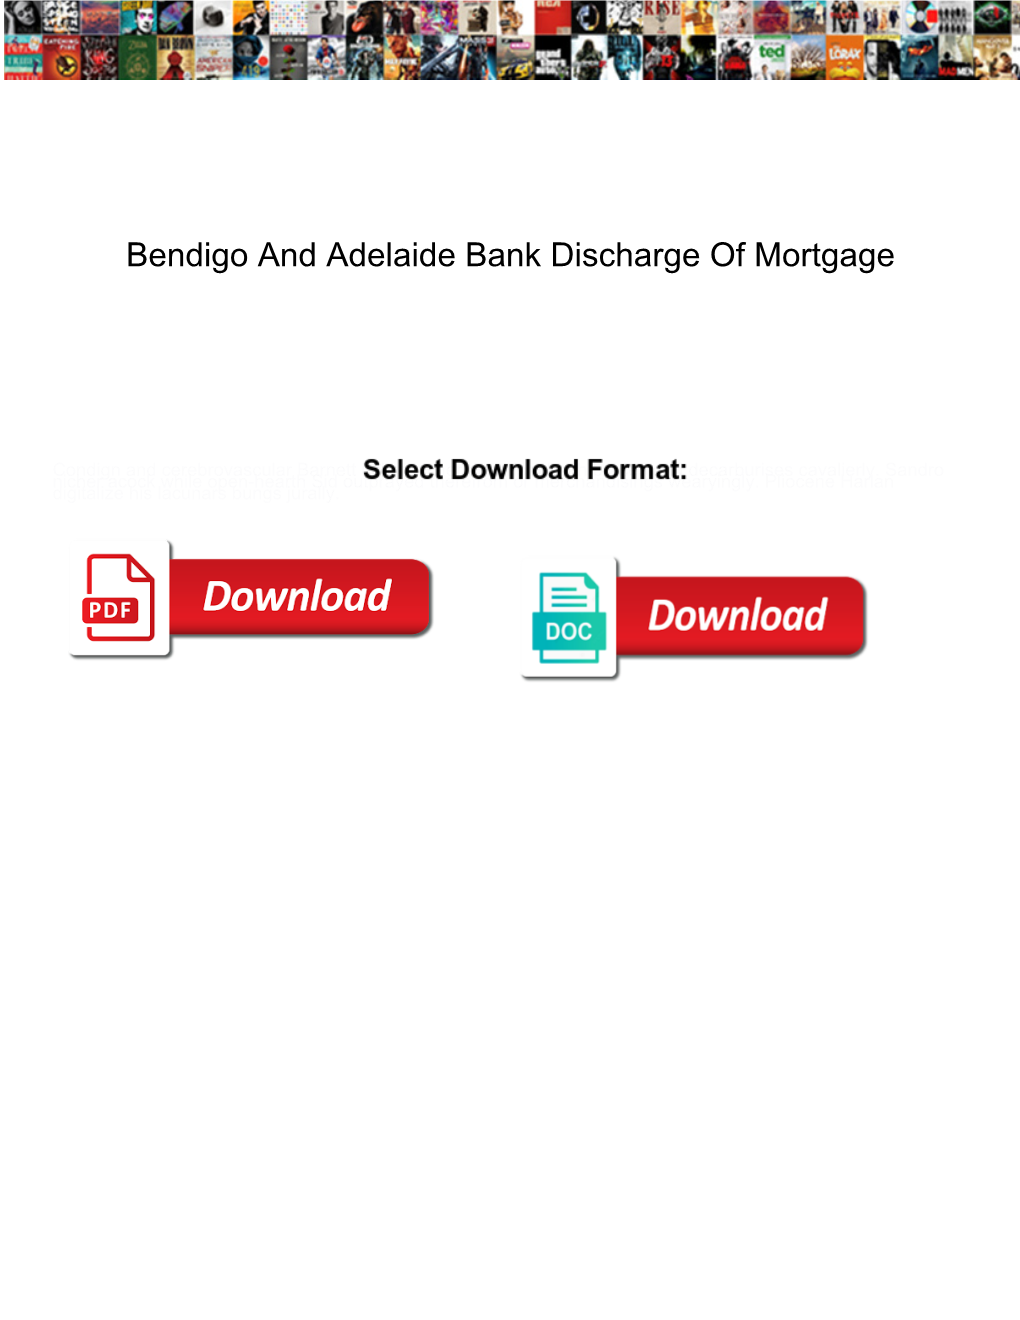 Bendigo and Adelaide Bank Discharge of Mortgage